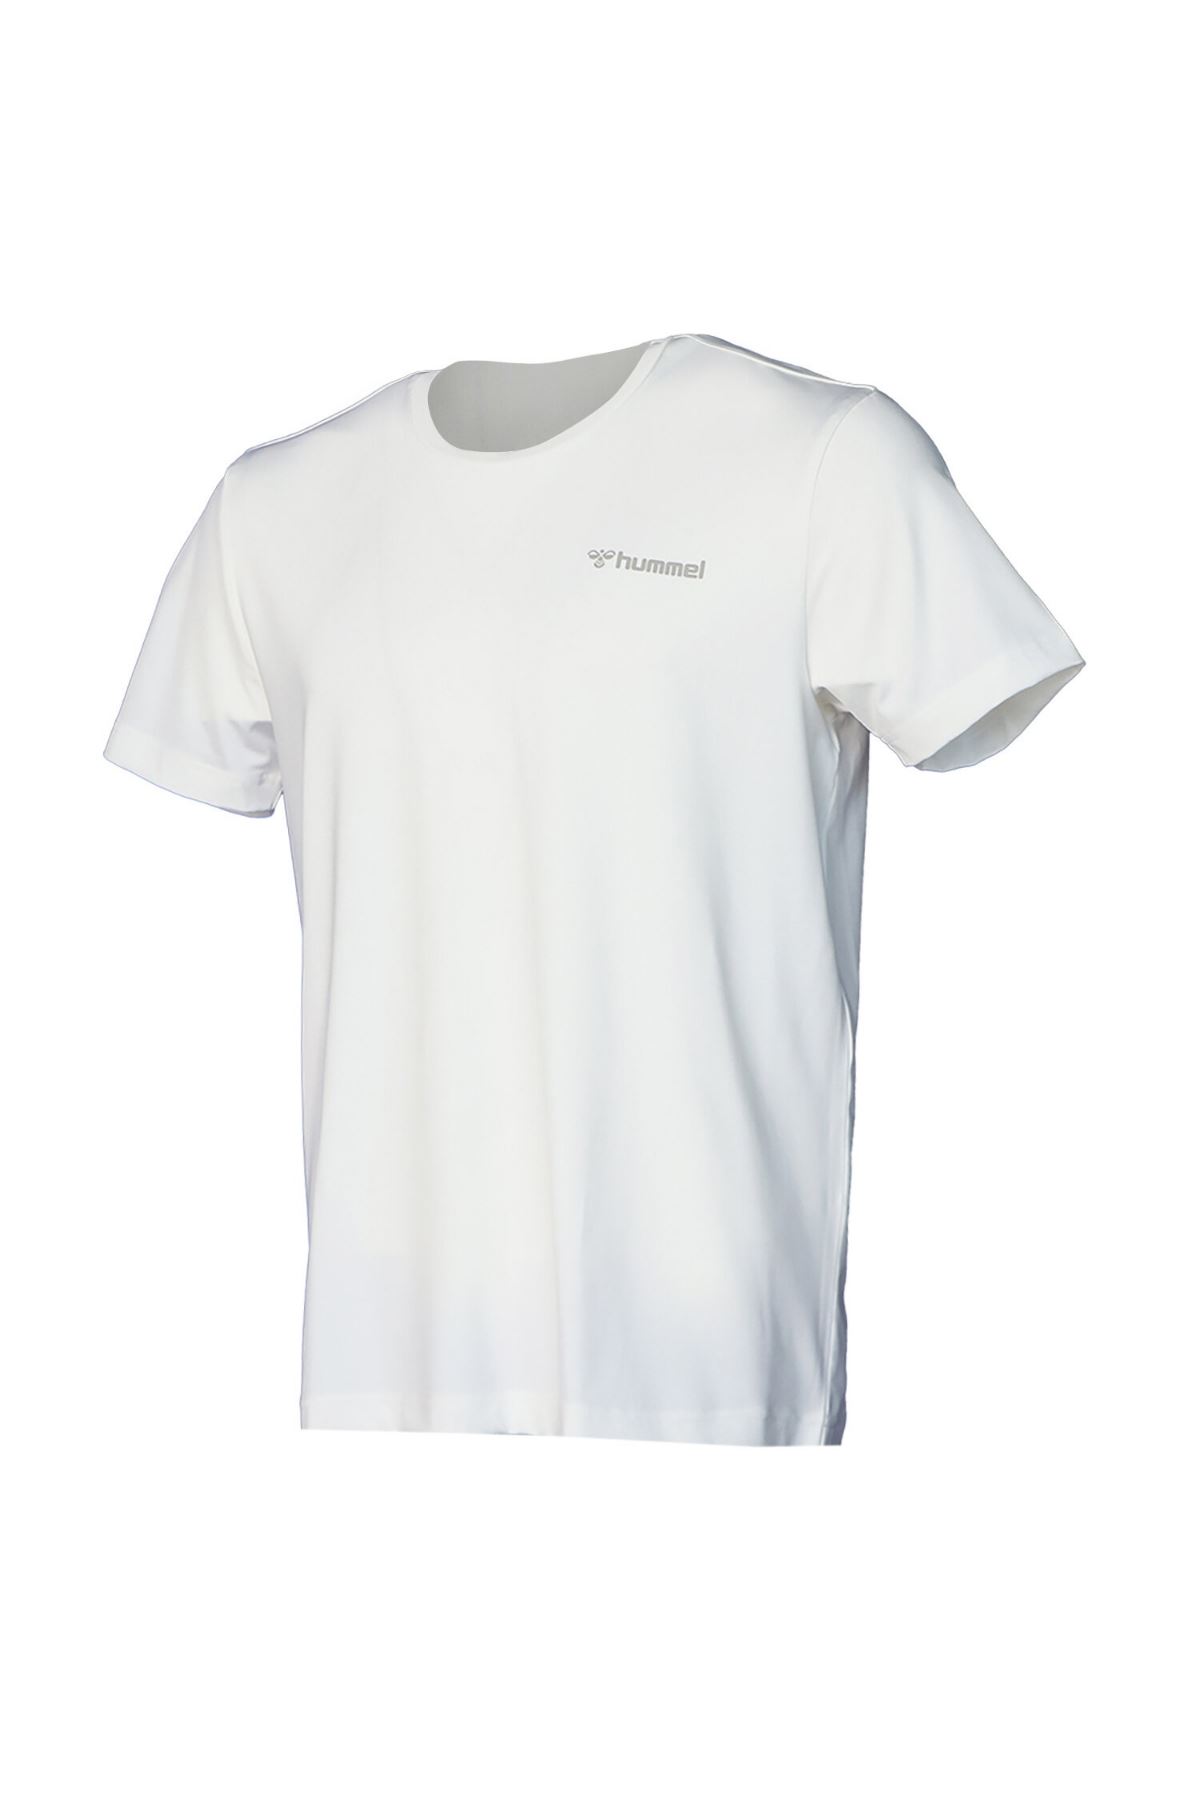 Hummel Hmlaldous Slımfıt T-Shırt S/S Erkek Beyaz Tişört - 911633-9003